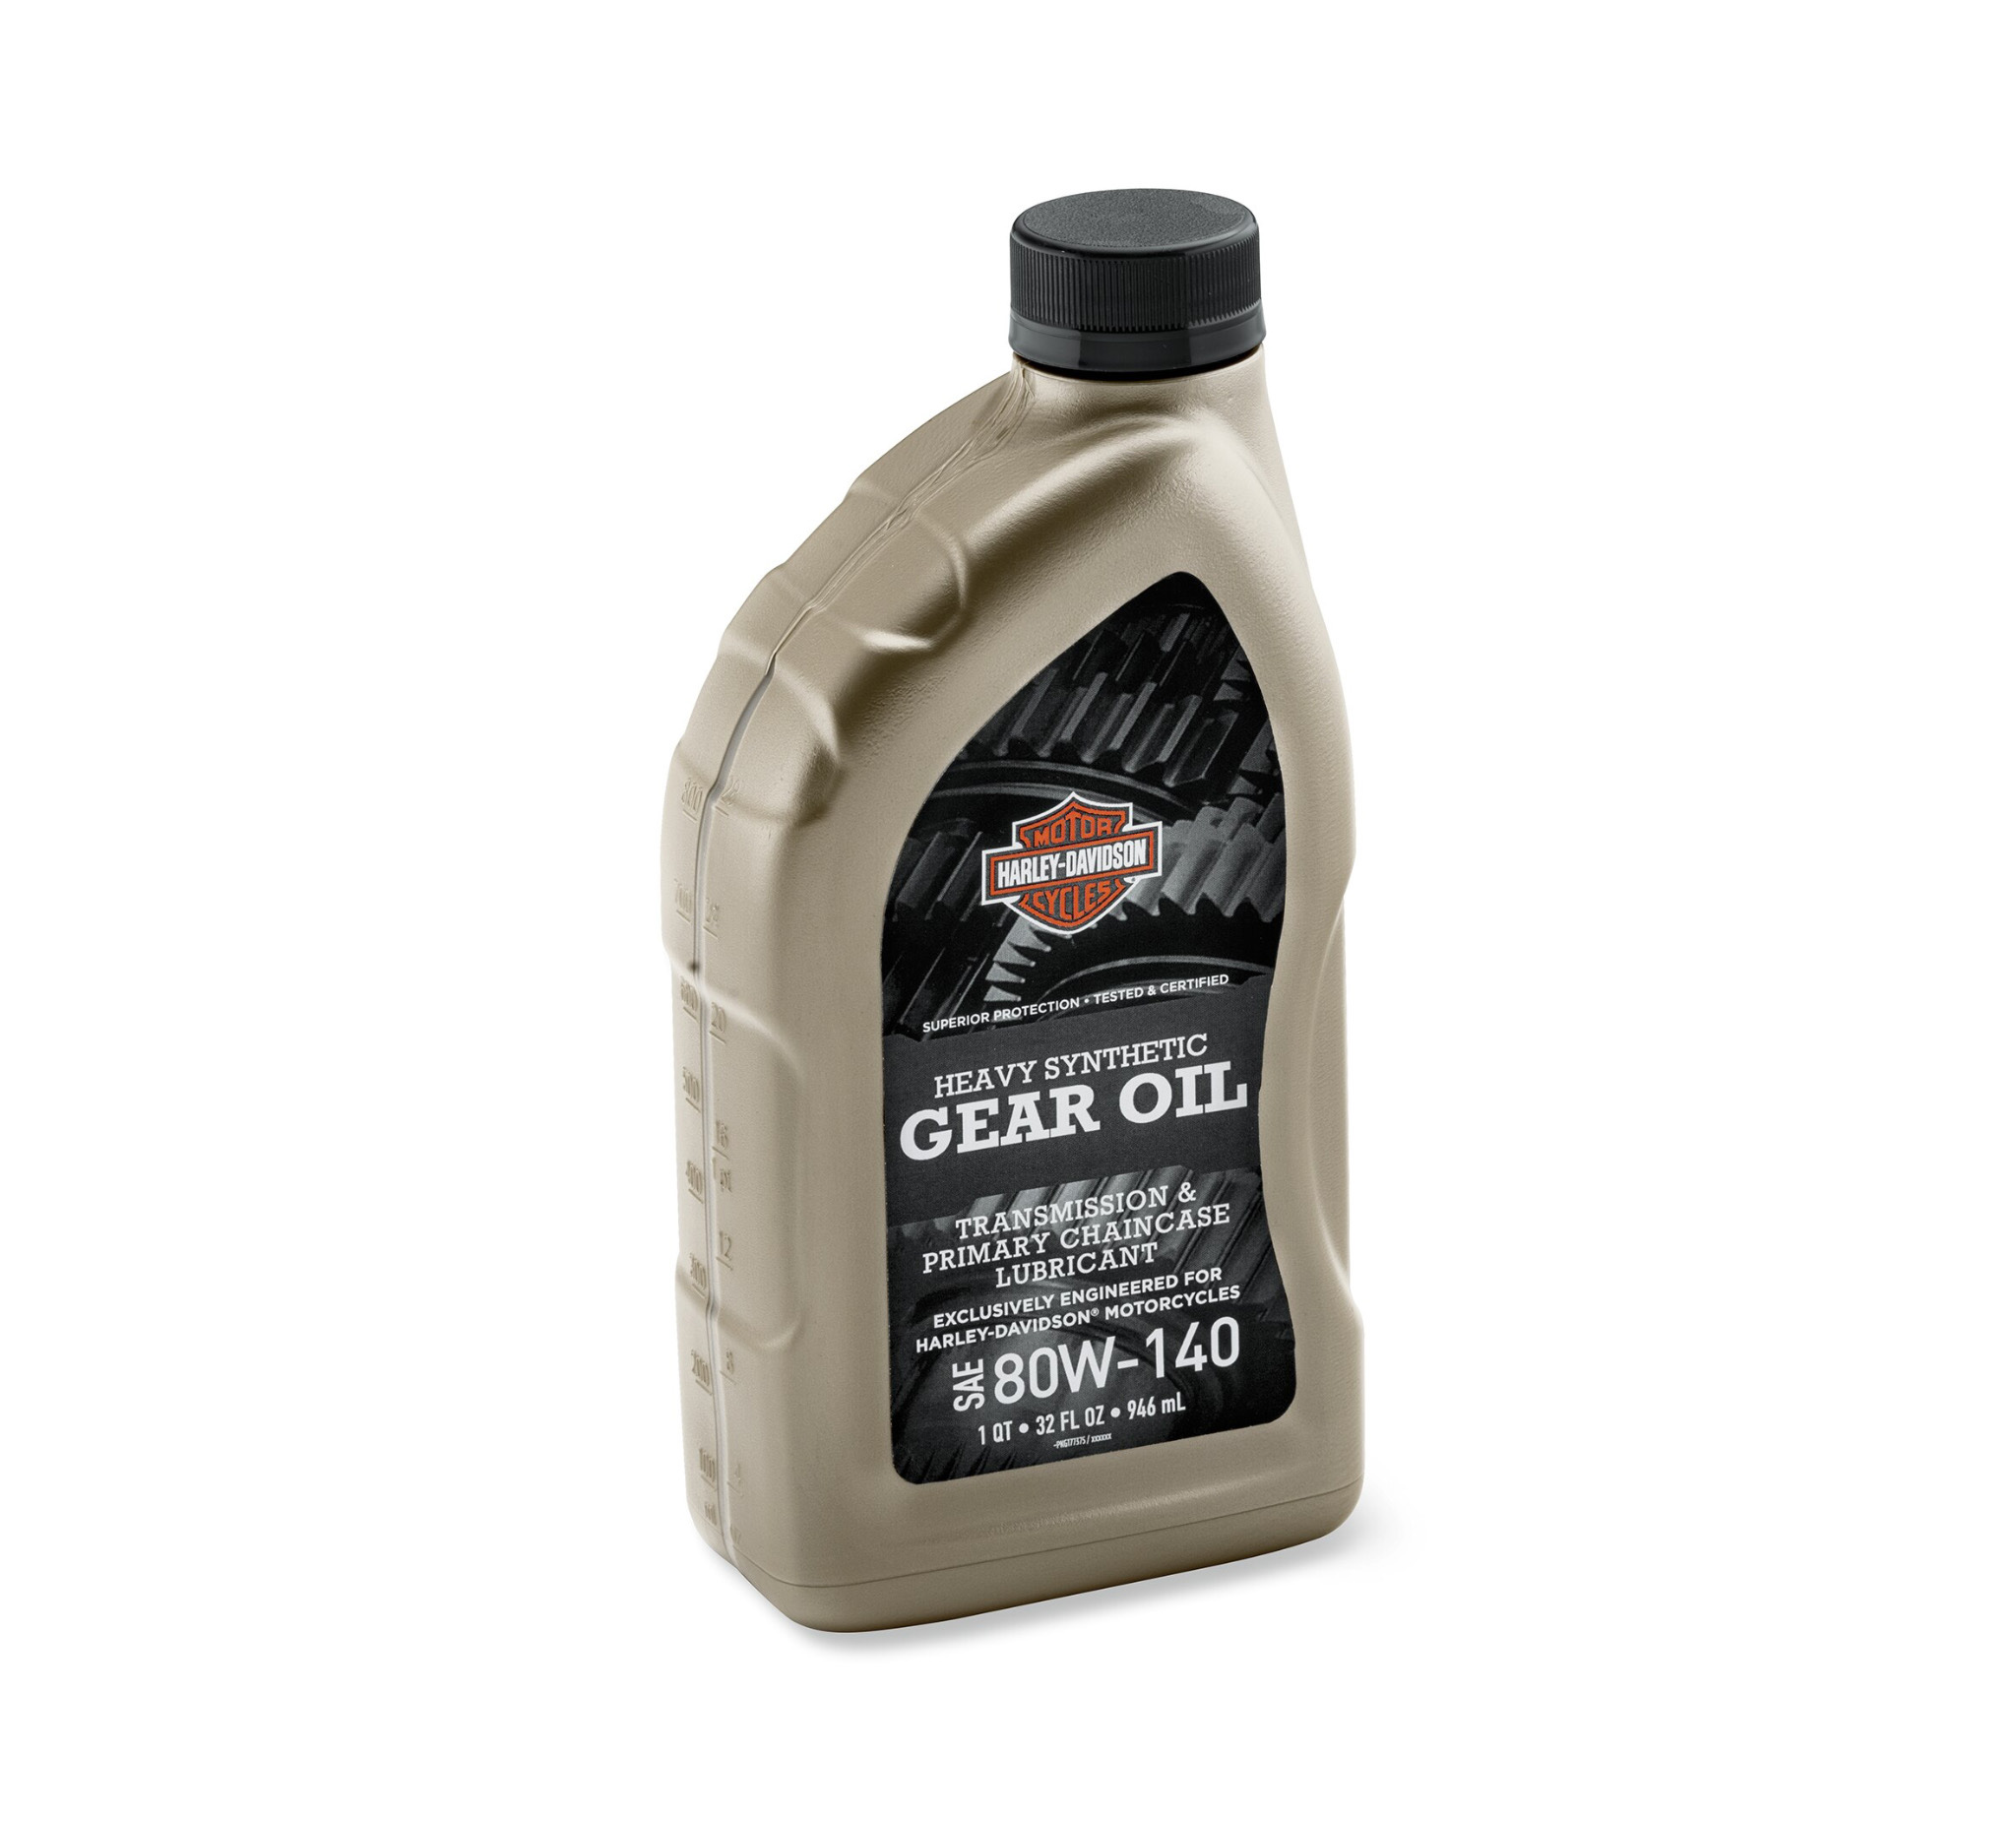 Heavy Synthetic Gear Oil | Harley-Davidson USA